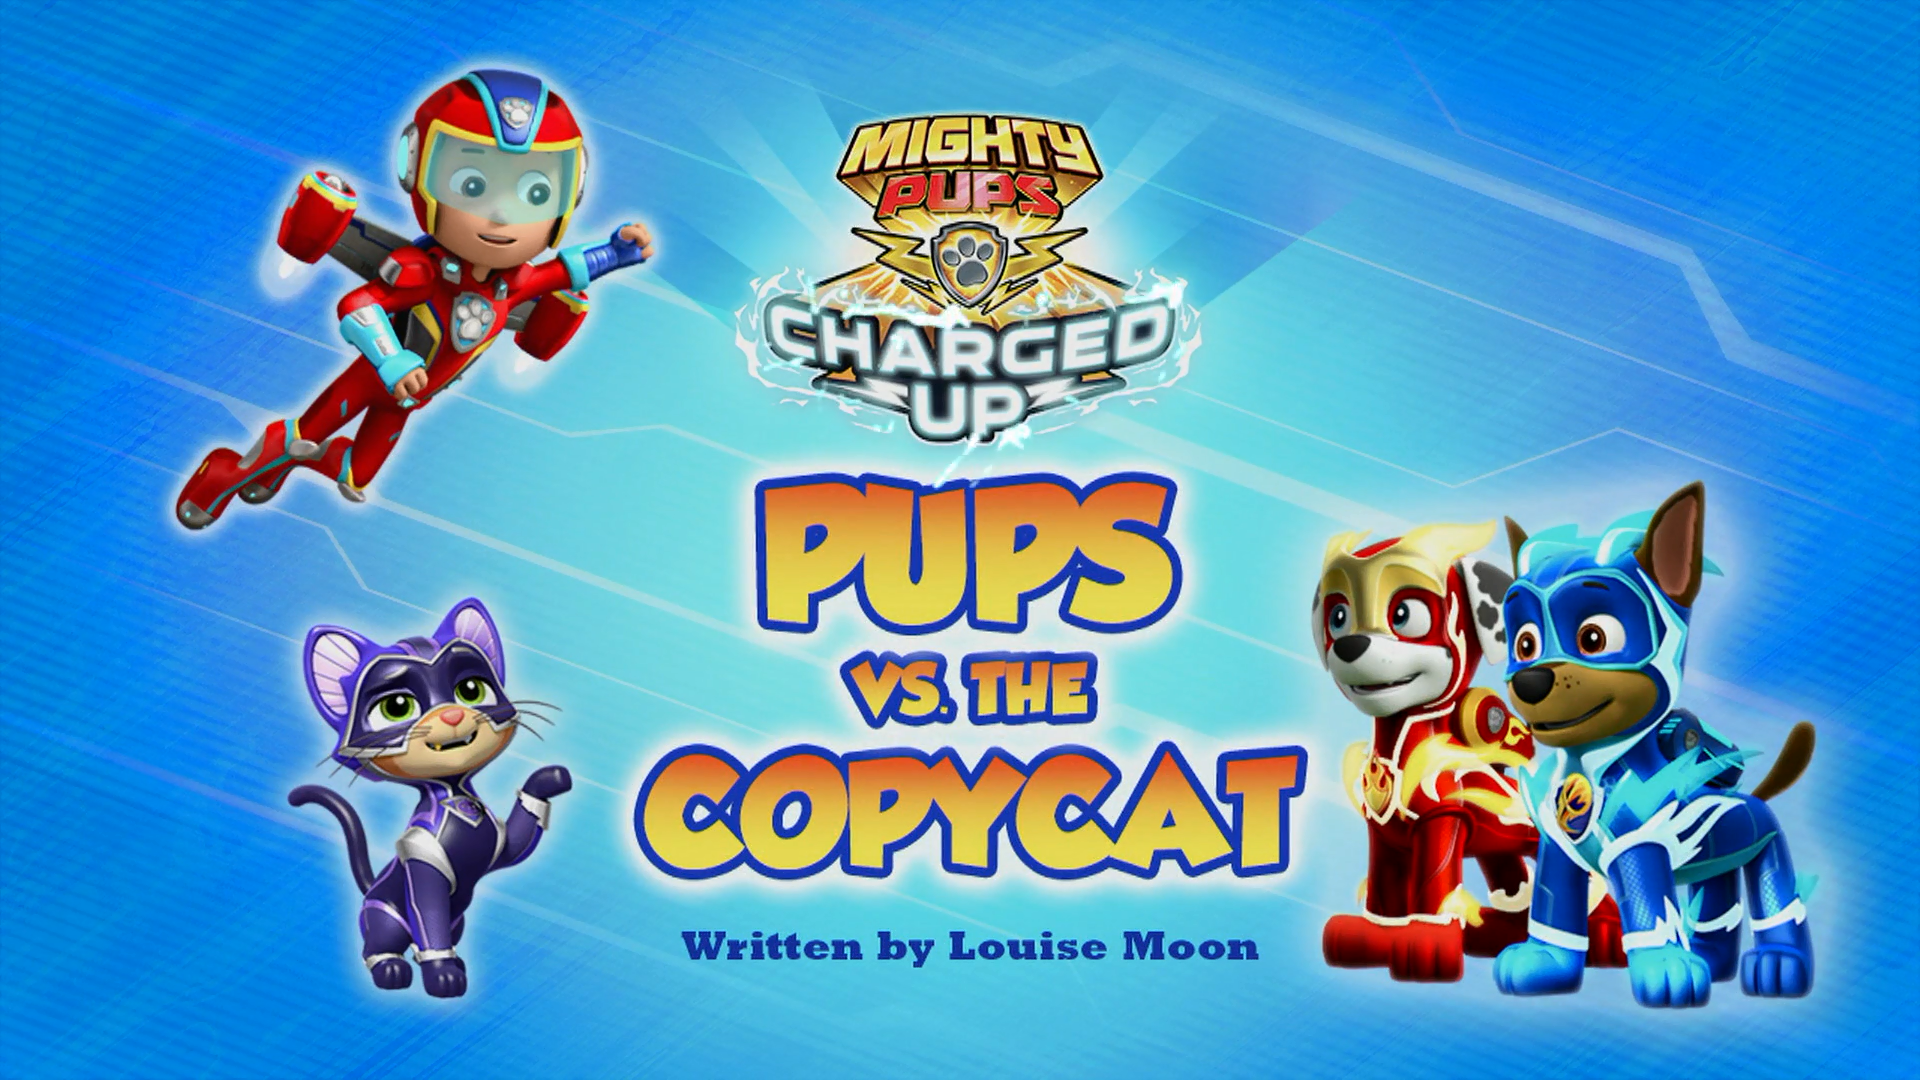 Søgemaskine markedsføring obligatorisk Perth Mighty Pups, Charged Up: Pups vs. the Copycat | PAW Patrol Wiki | Fandom